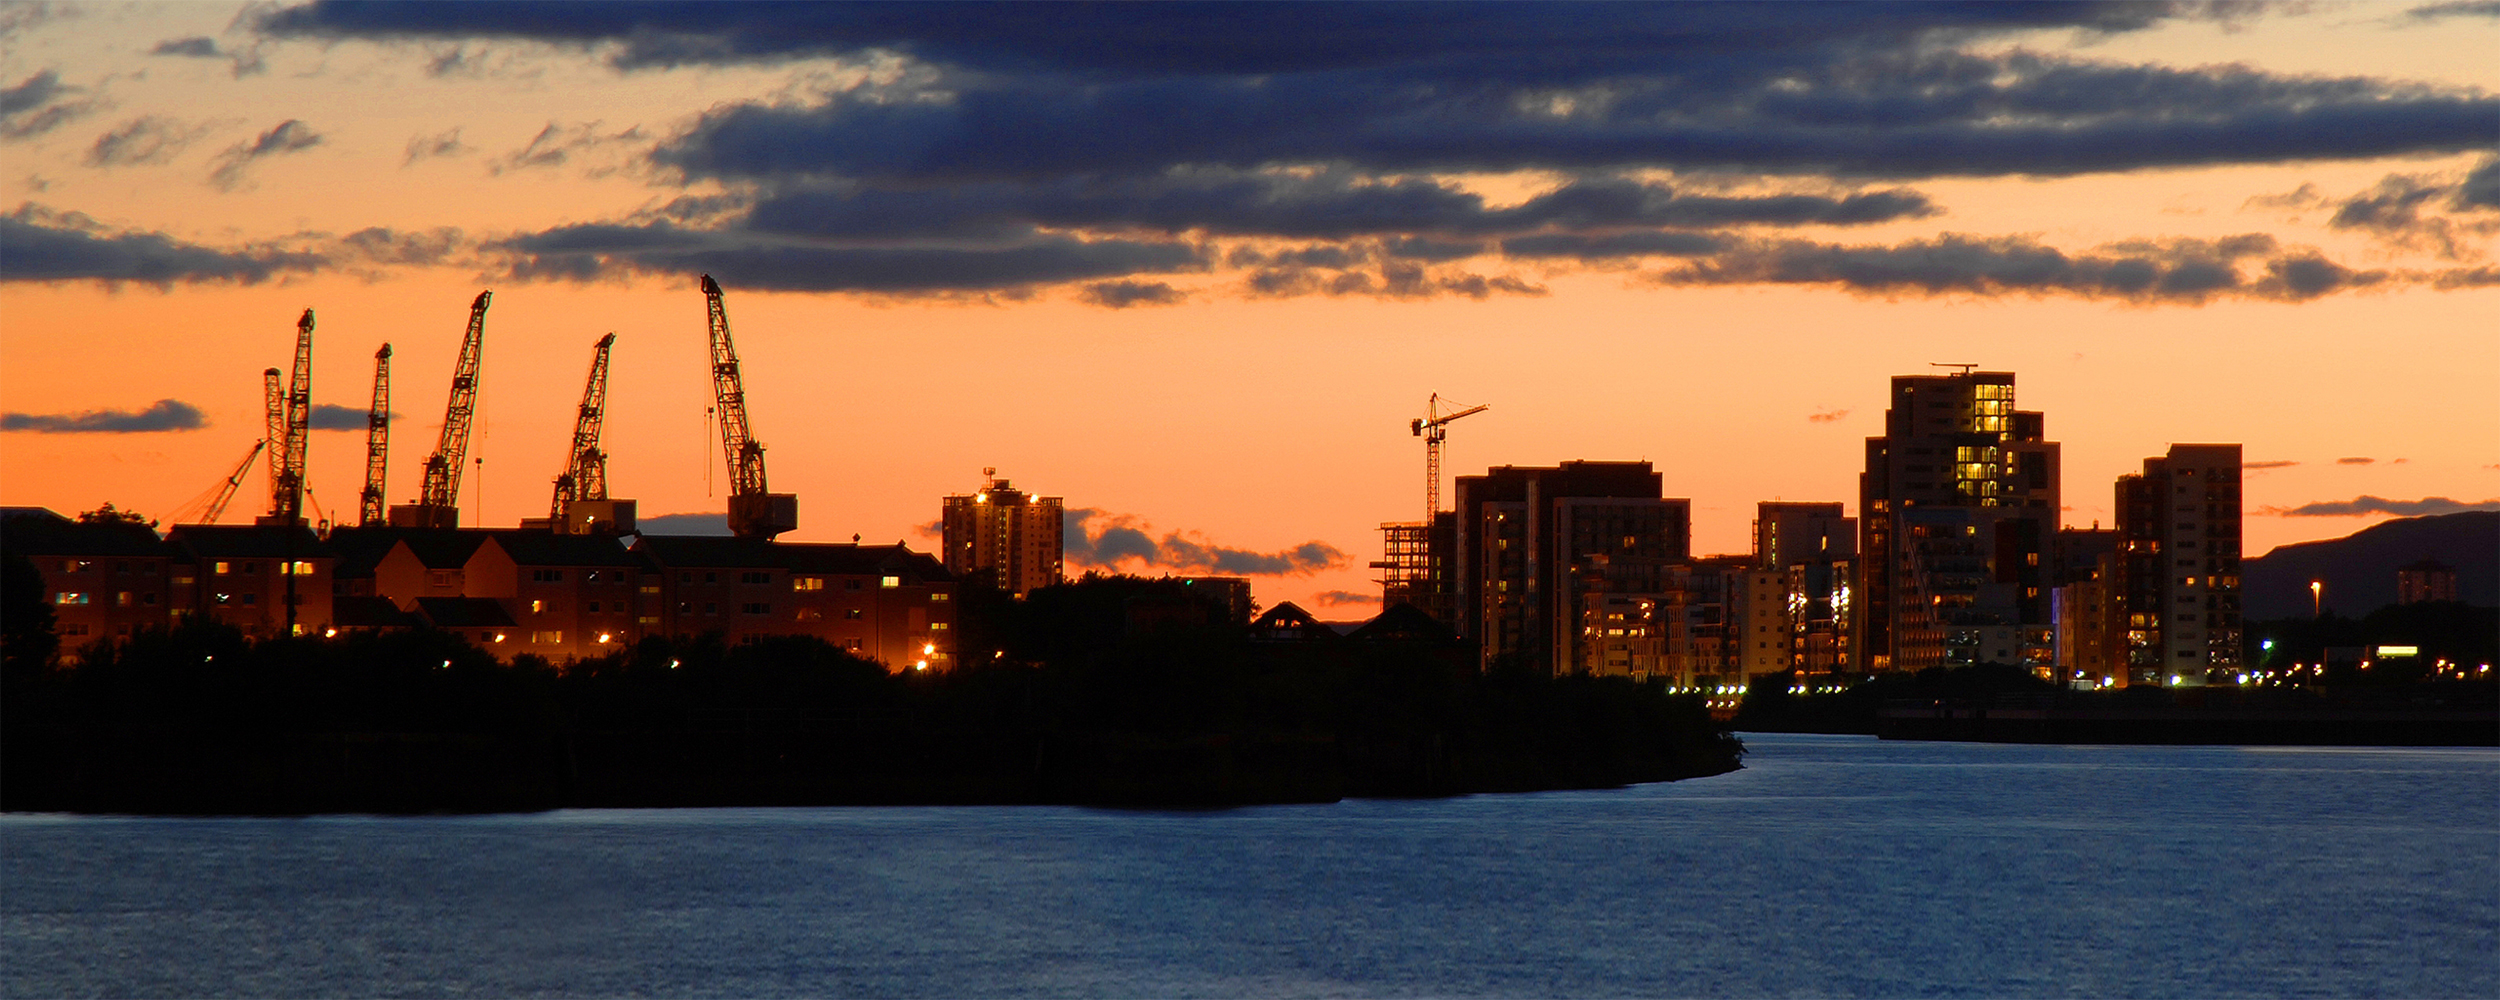 Glasgow Clyde sunset panoramic scene